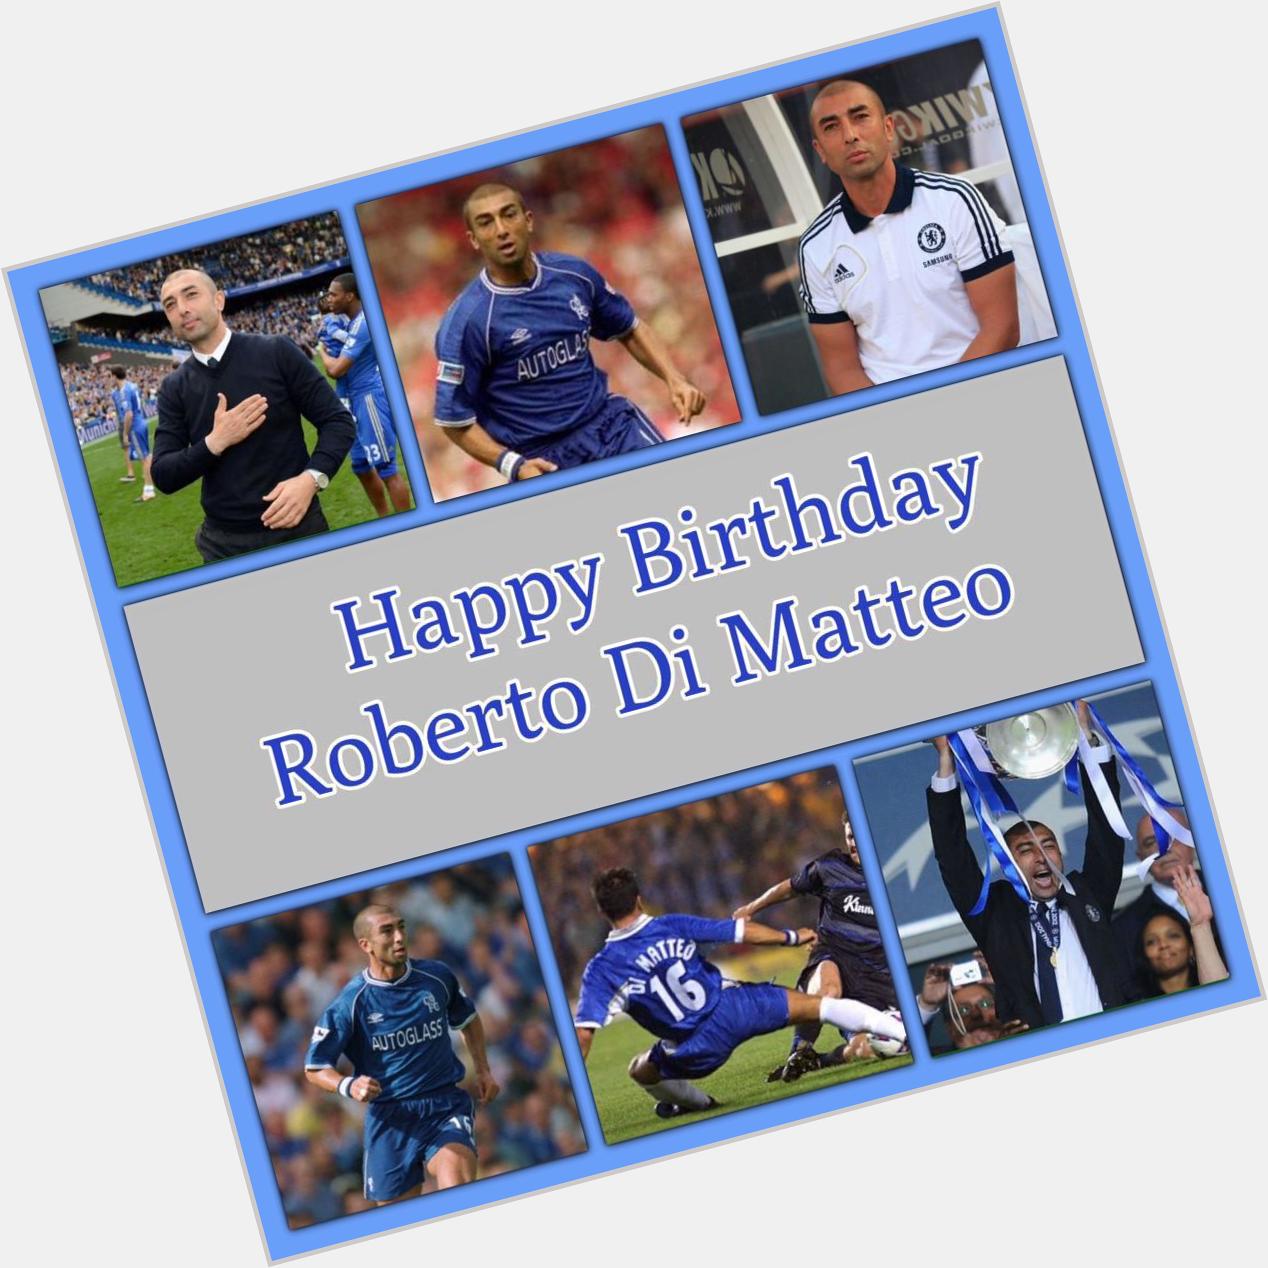 Happy birthday to Chelsea legend Roberto Di Matteo. 